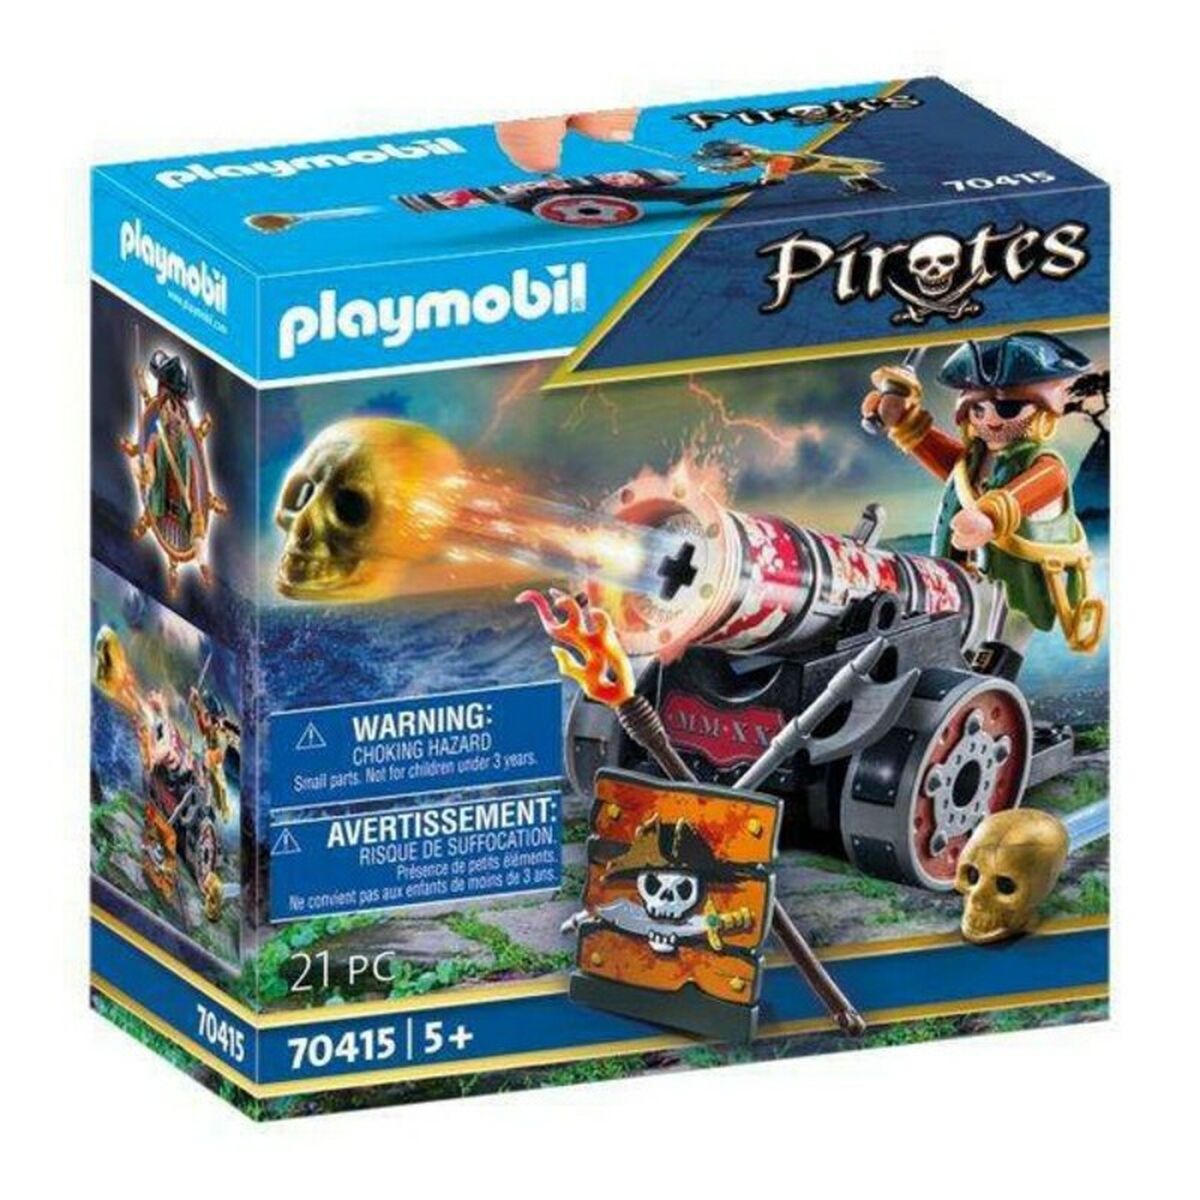 Playset Pirates Playmobil 70415 (21 pcs) - Little Baby Shop